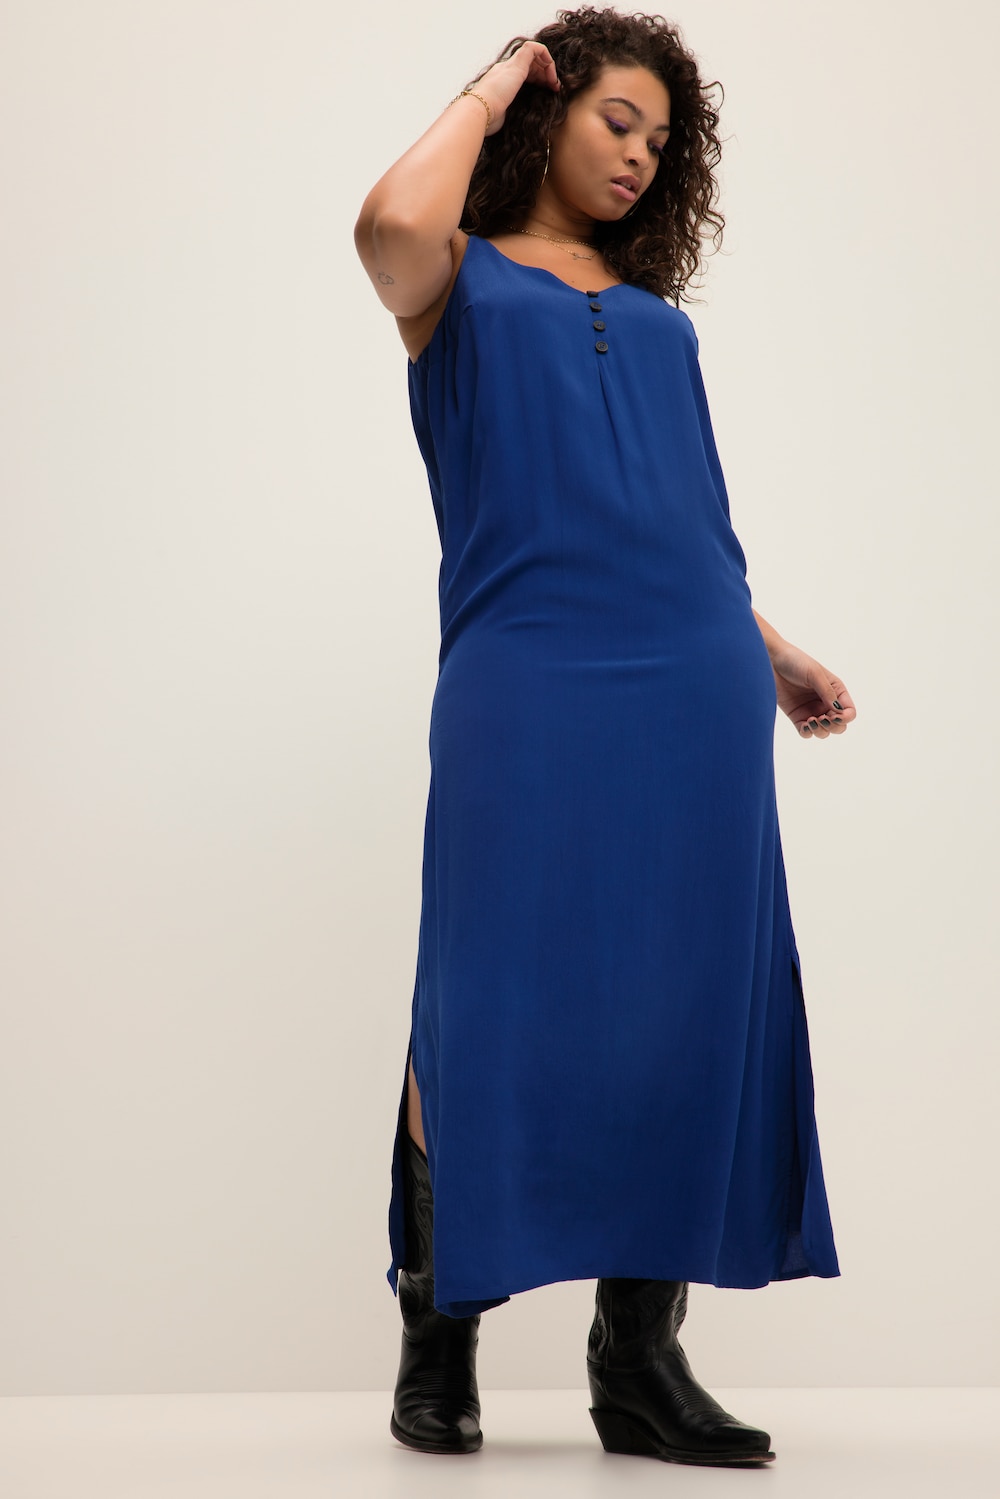 Grote Maten Maxi jurk, Dames, blauw, Maat: 54/56, Viscose, Studio Untold